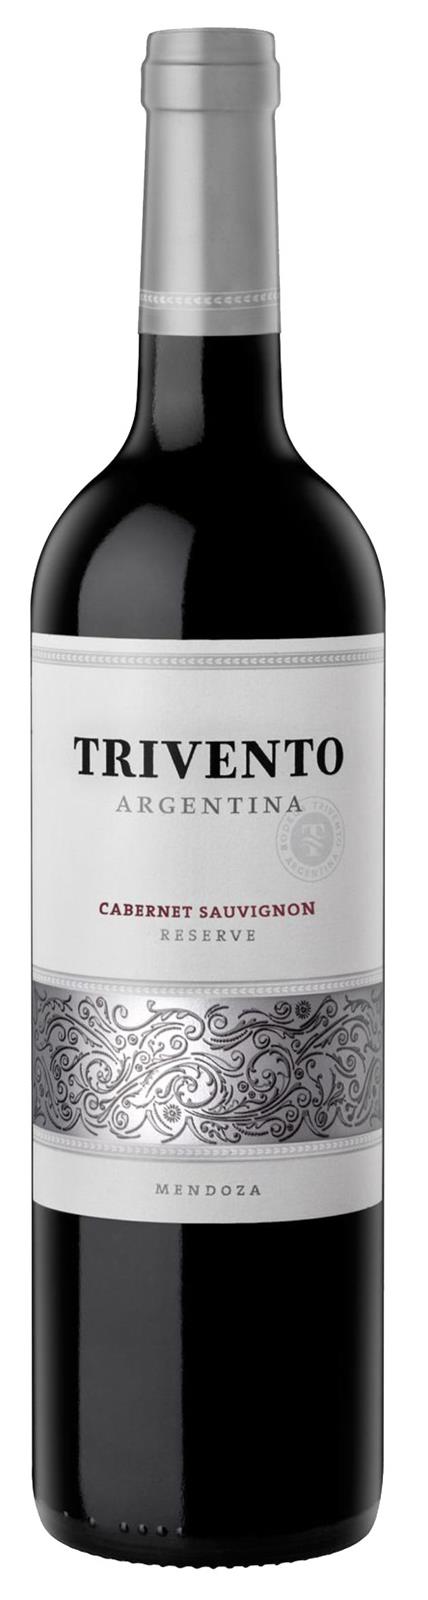 Trivento Reserve Cabernet Sauvignon 2020 (Argentina)